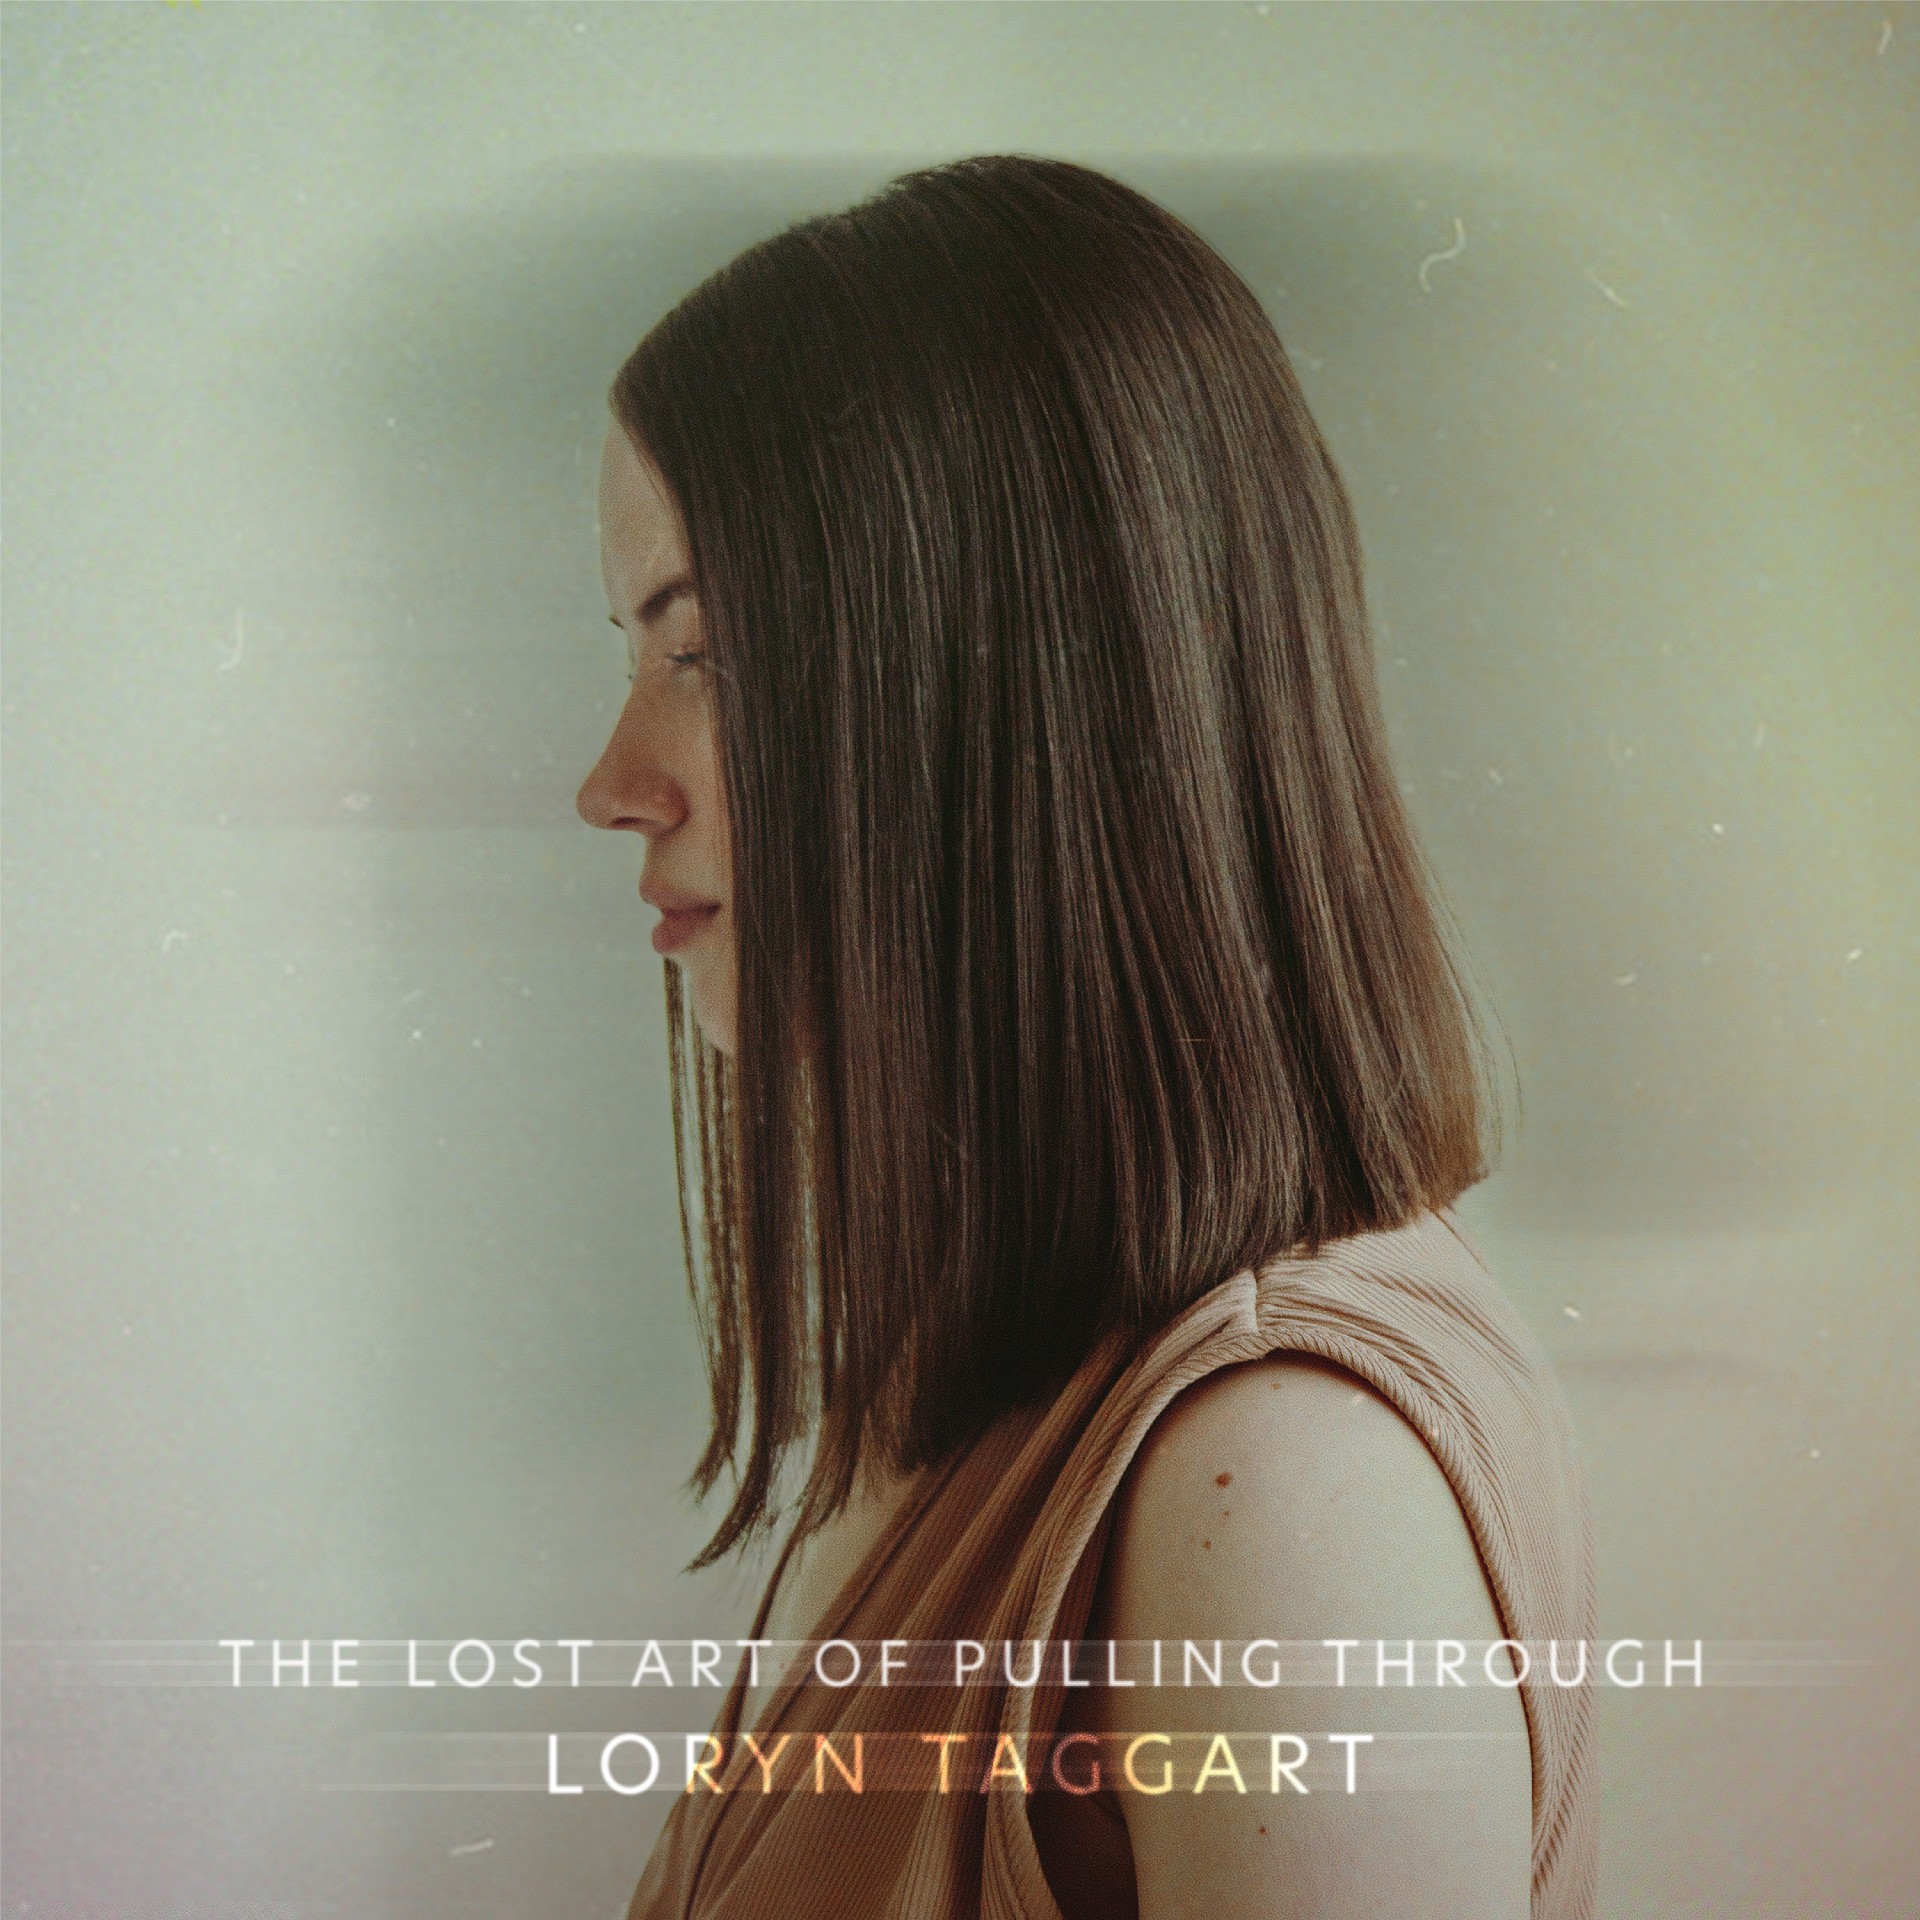 Loryn Taggart ‘The Lost Art of Pulling Through’ album artwork